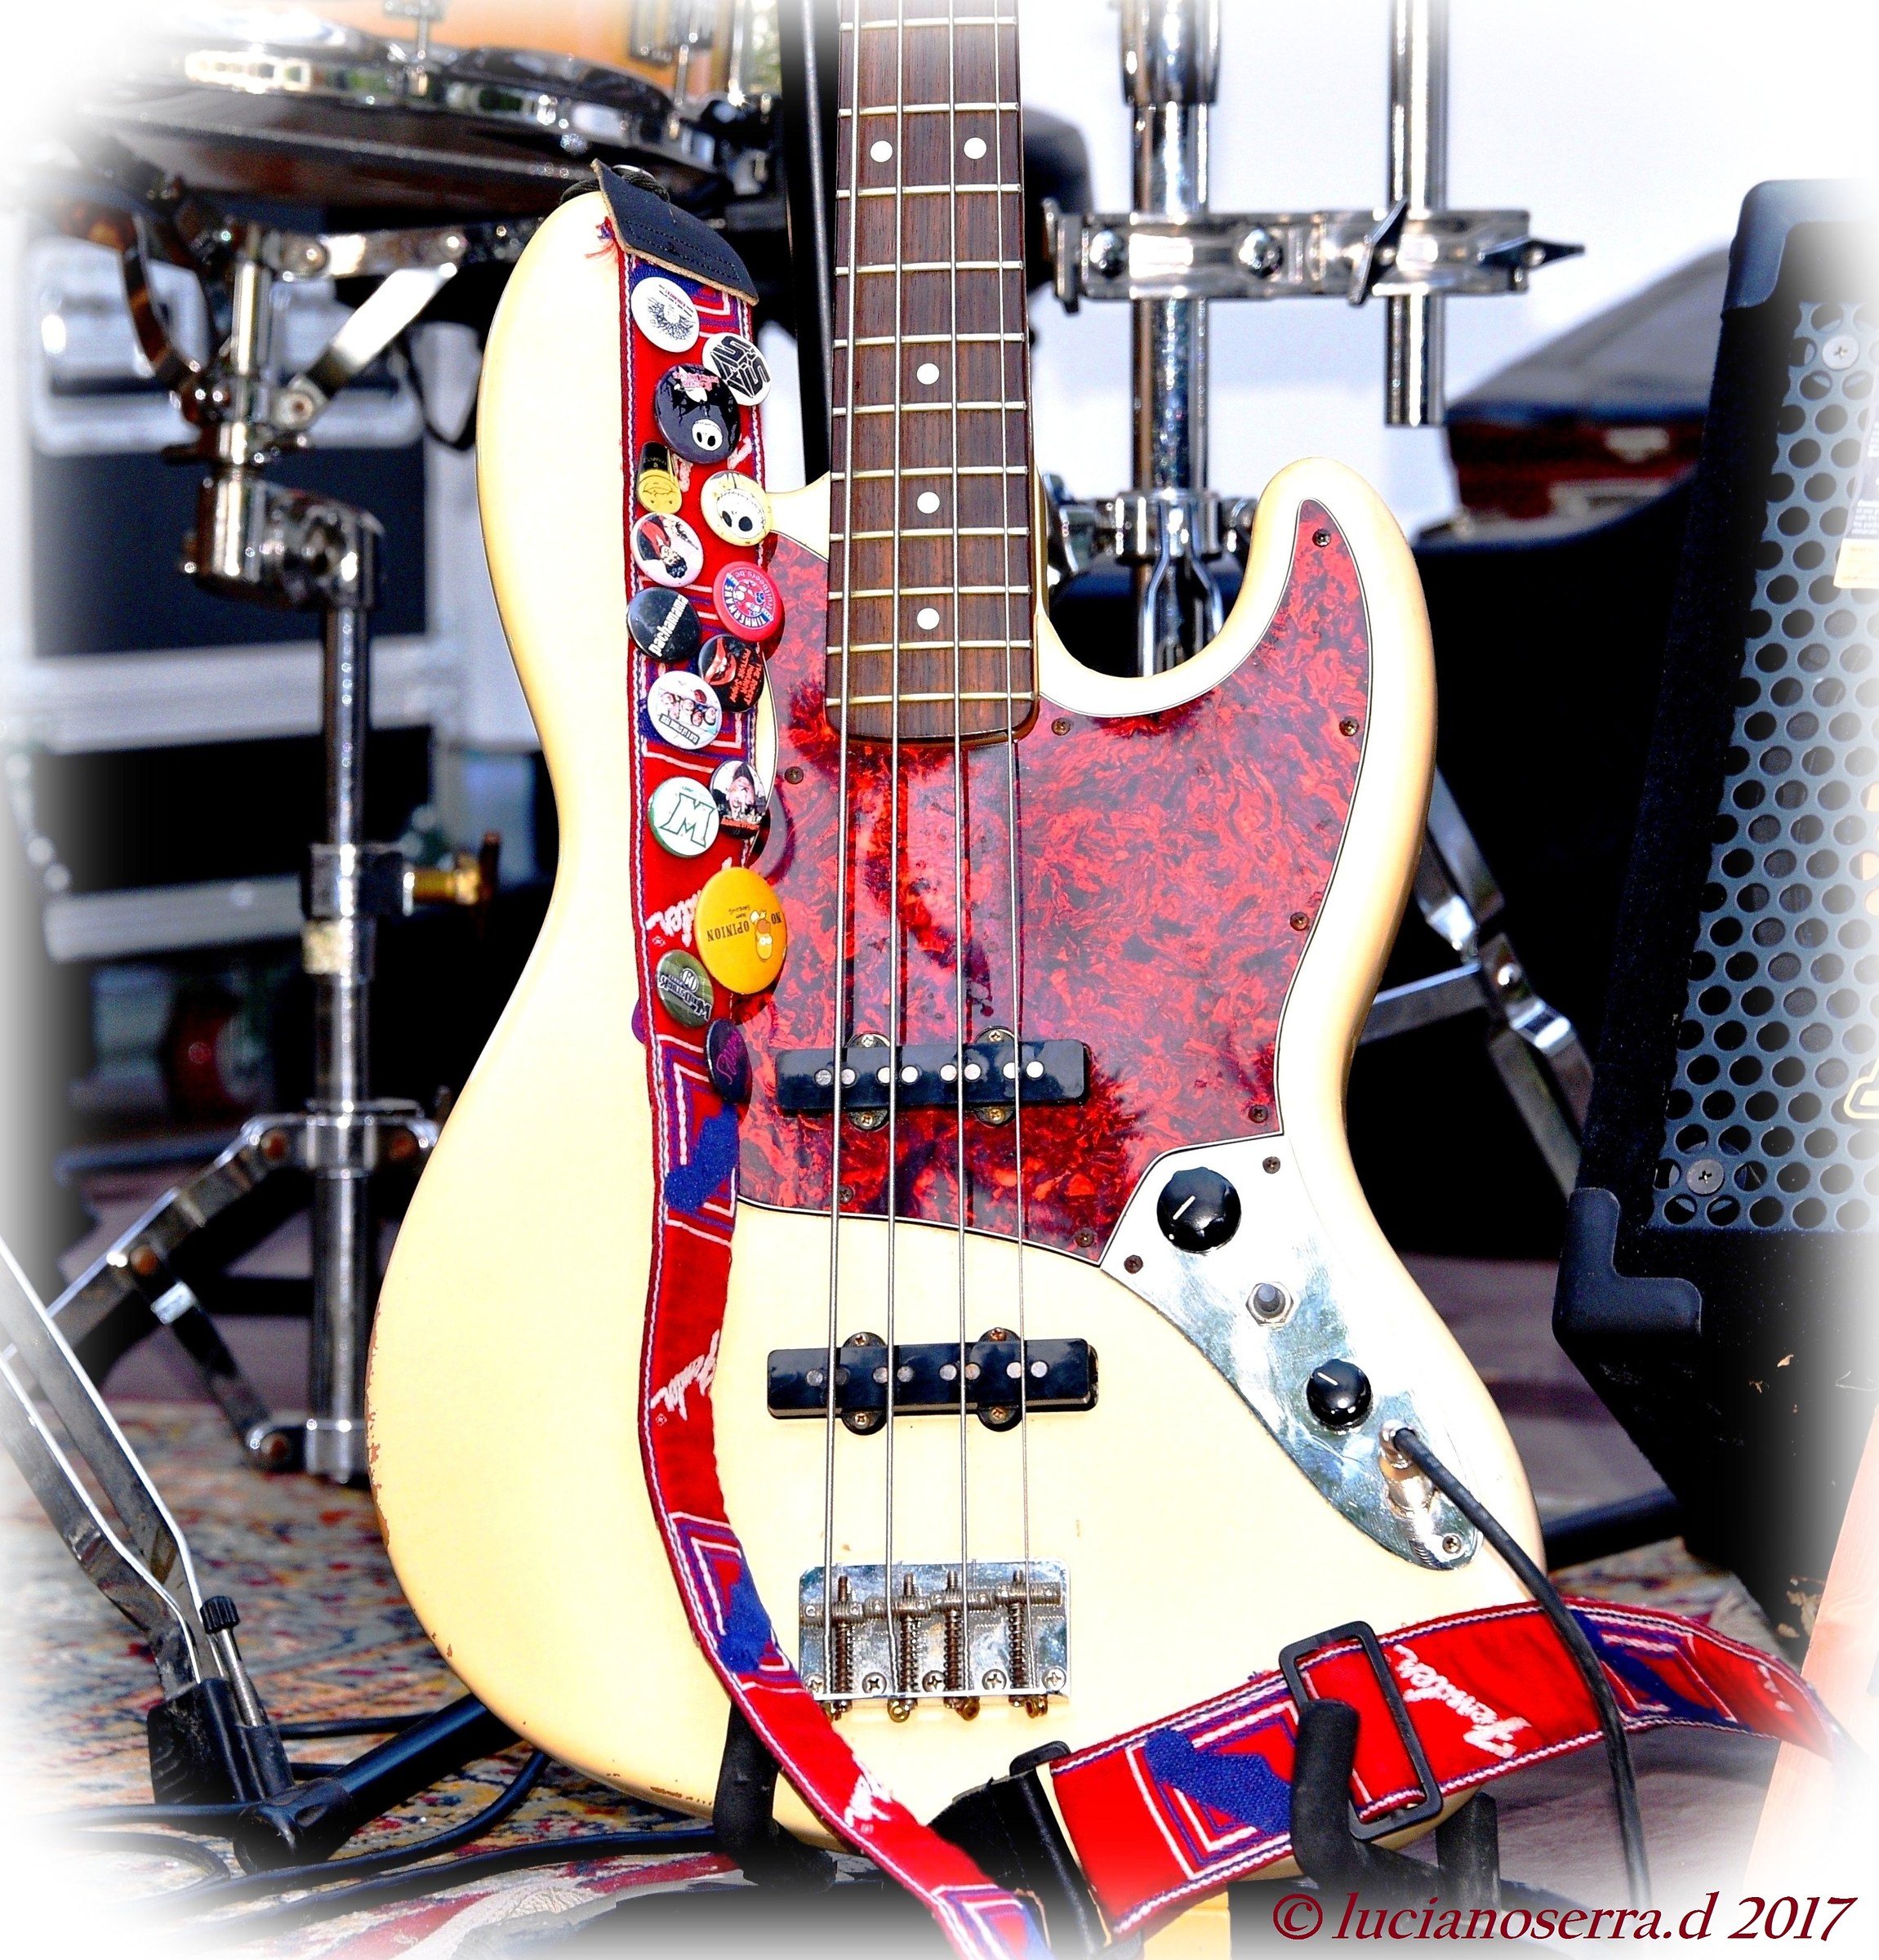 Michael's Low Fender...